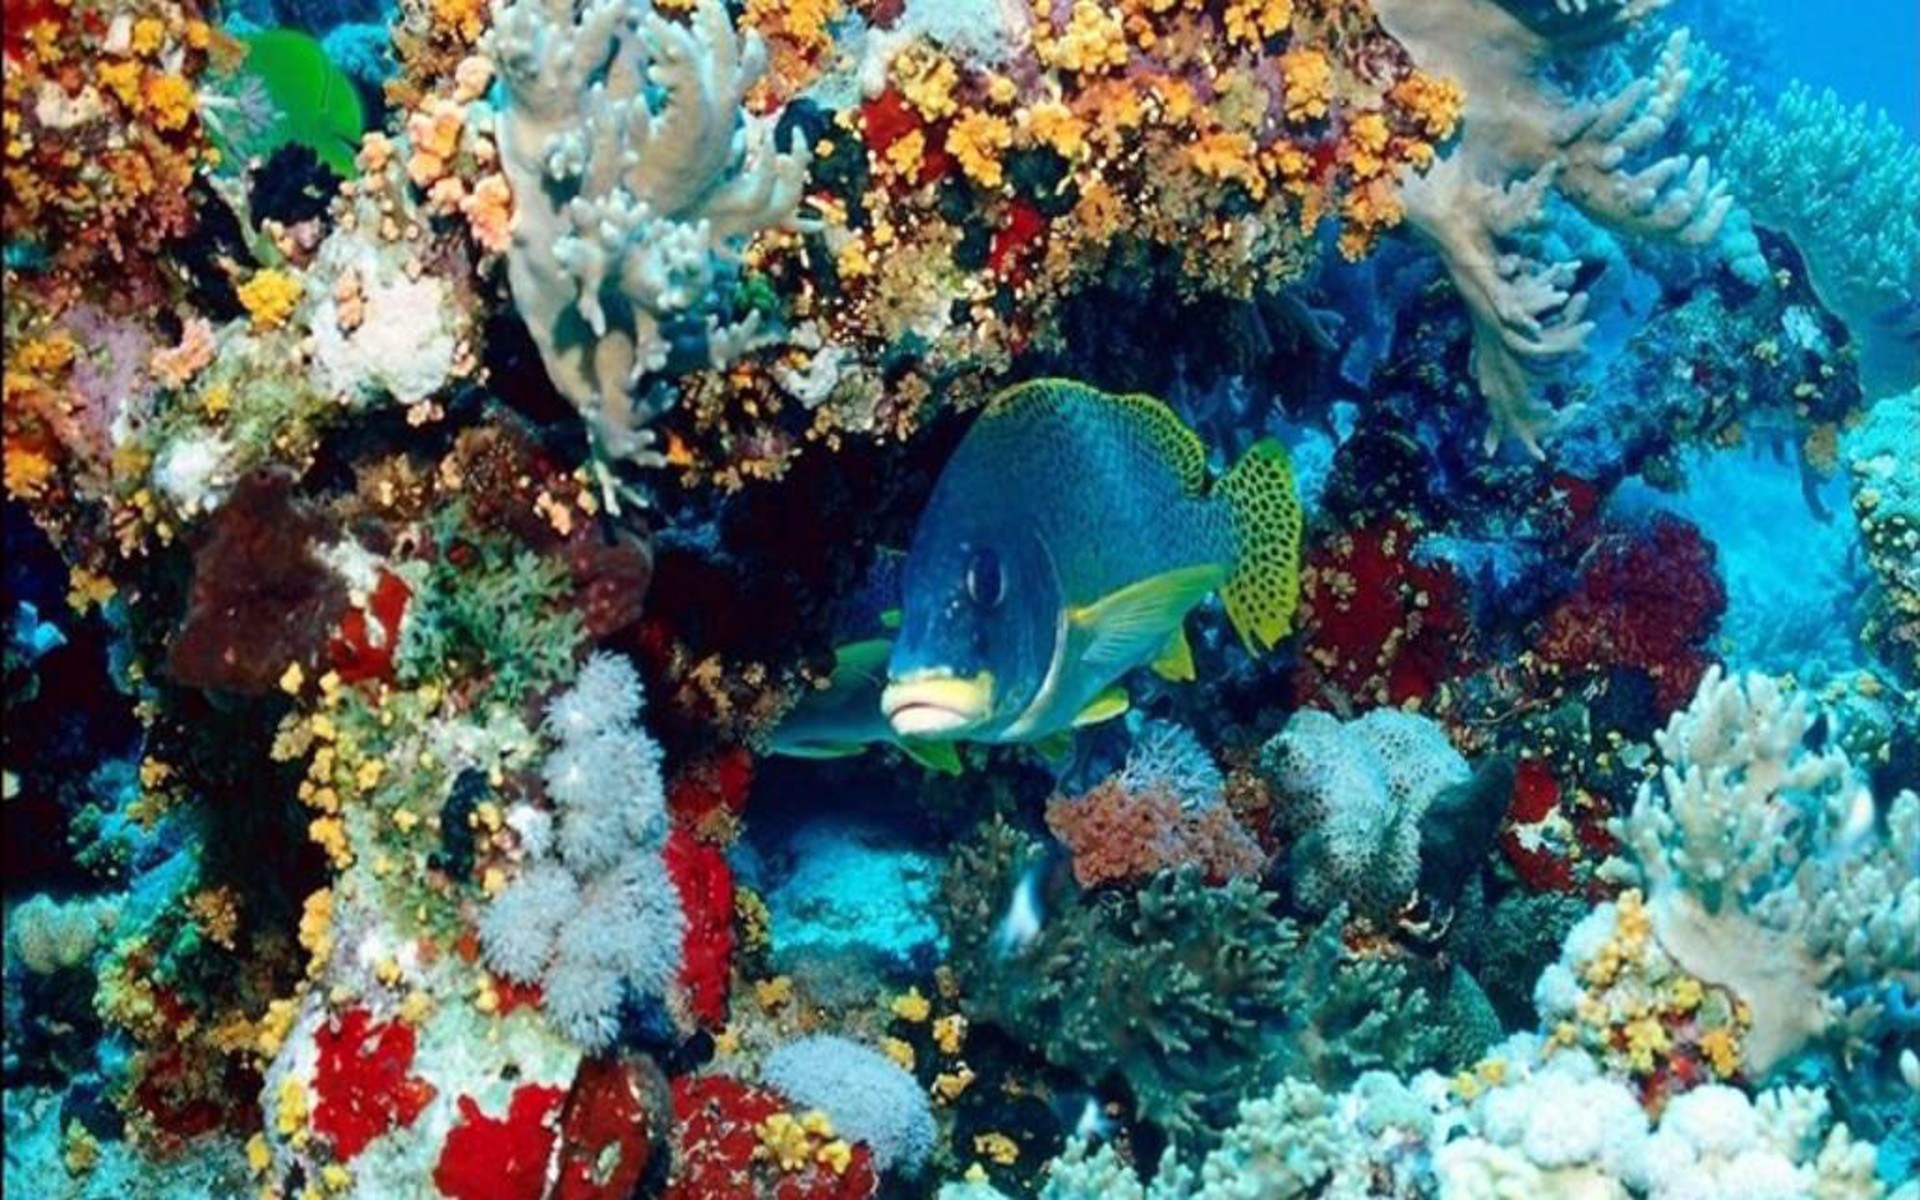 Underwater coral. Подводный риф риф. Риф коралловый 54546. Подводный мир кораллы. Морской мир.